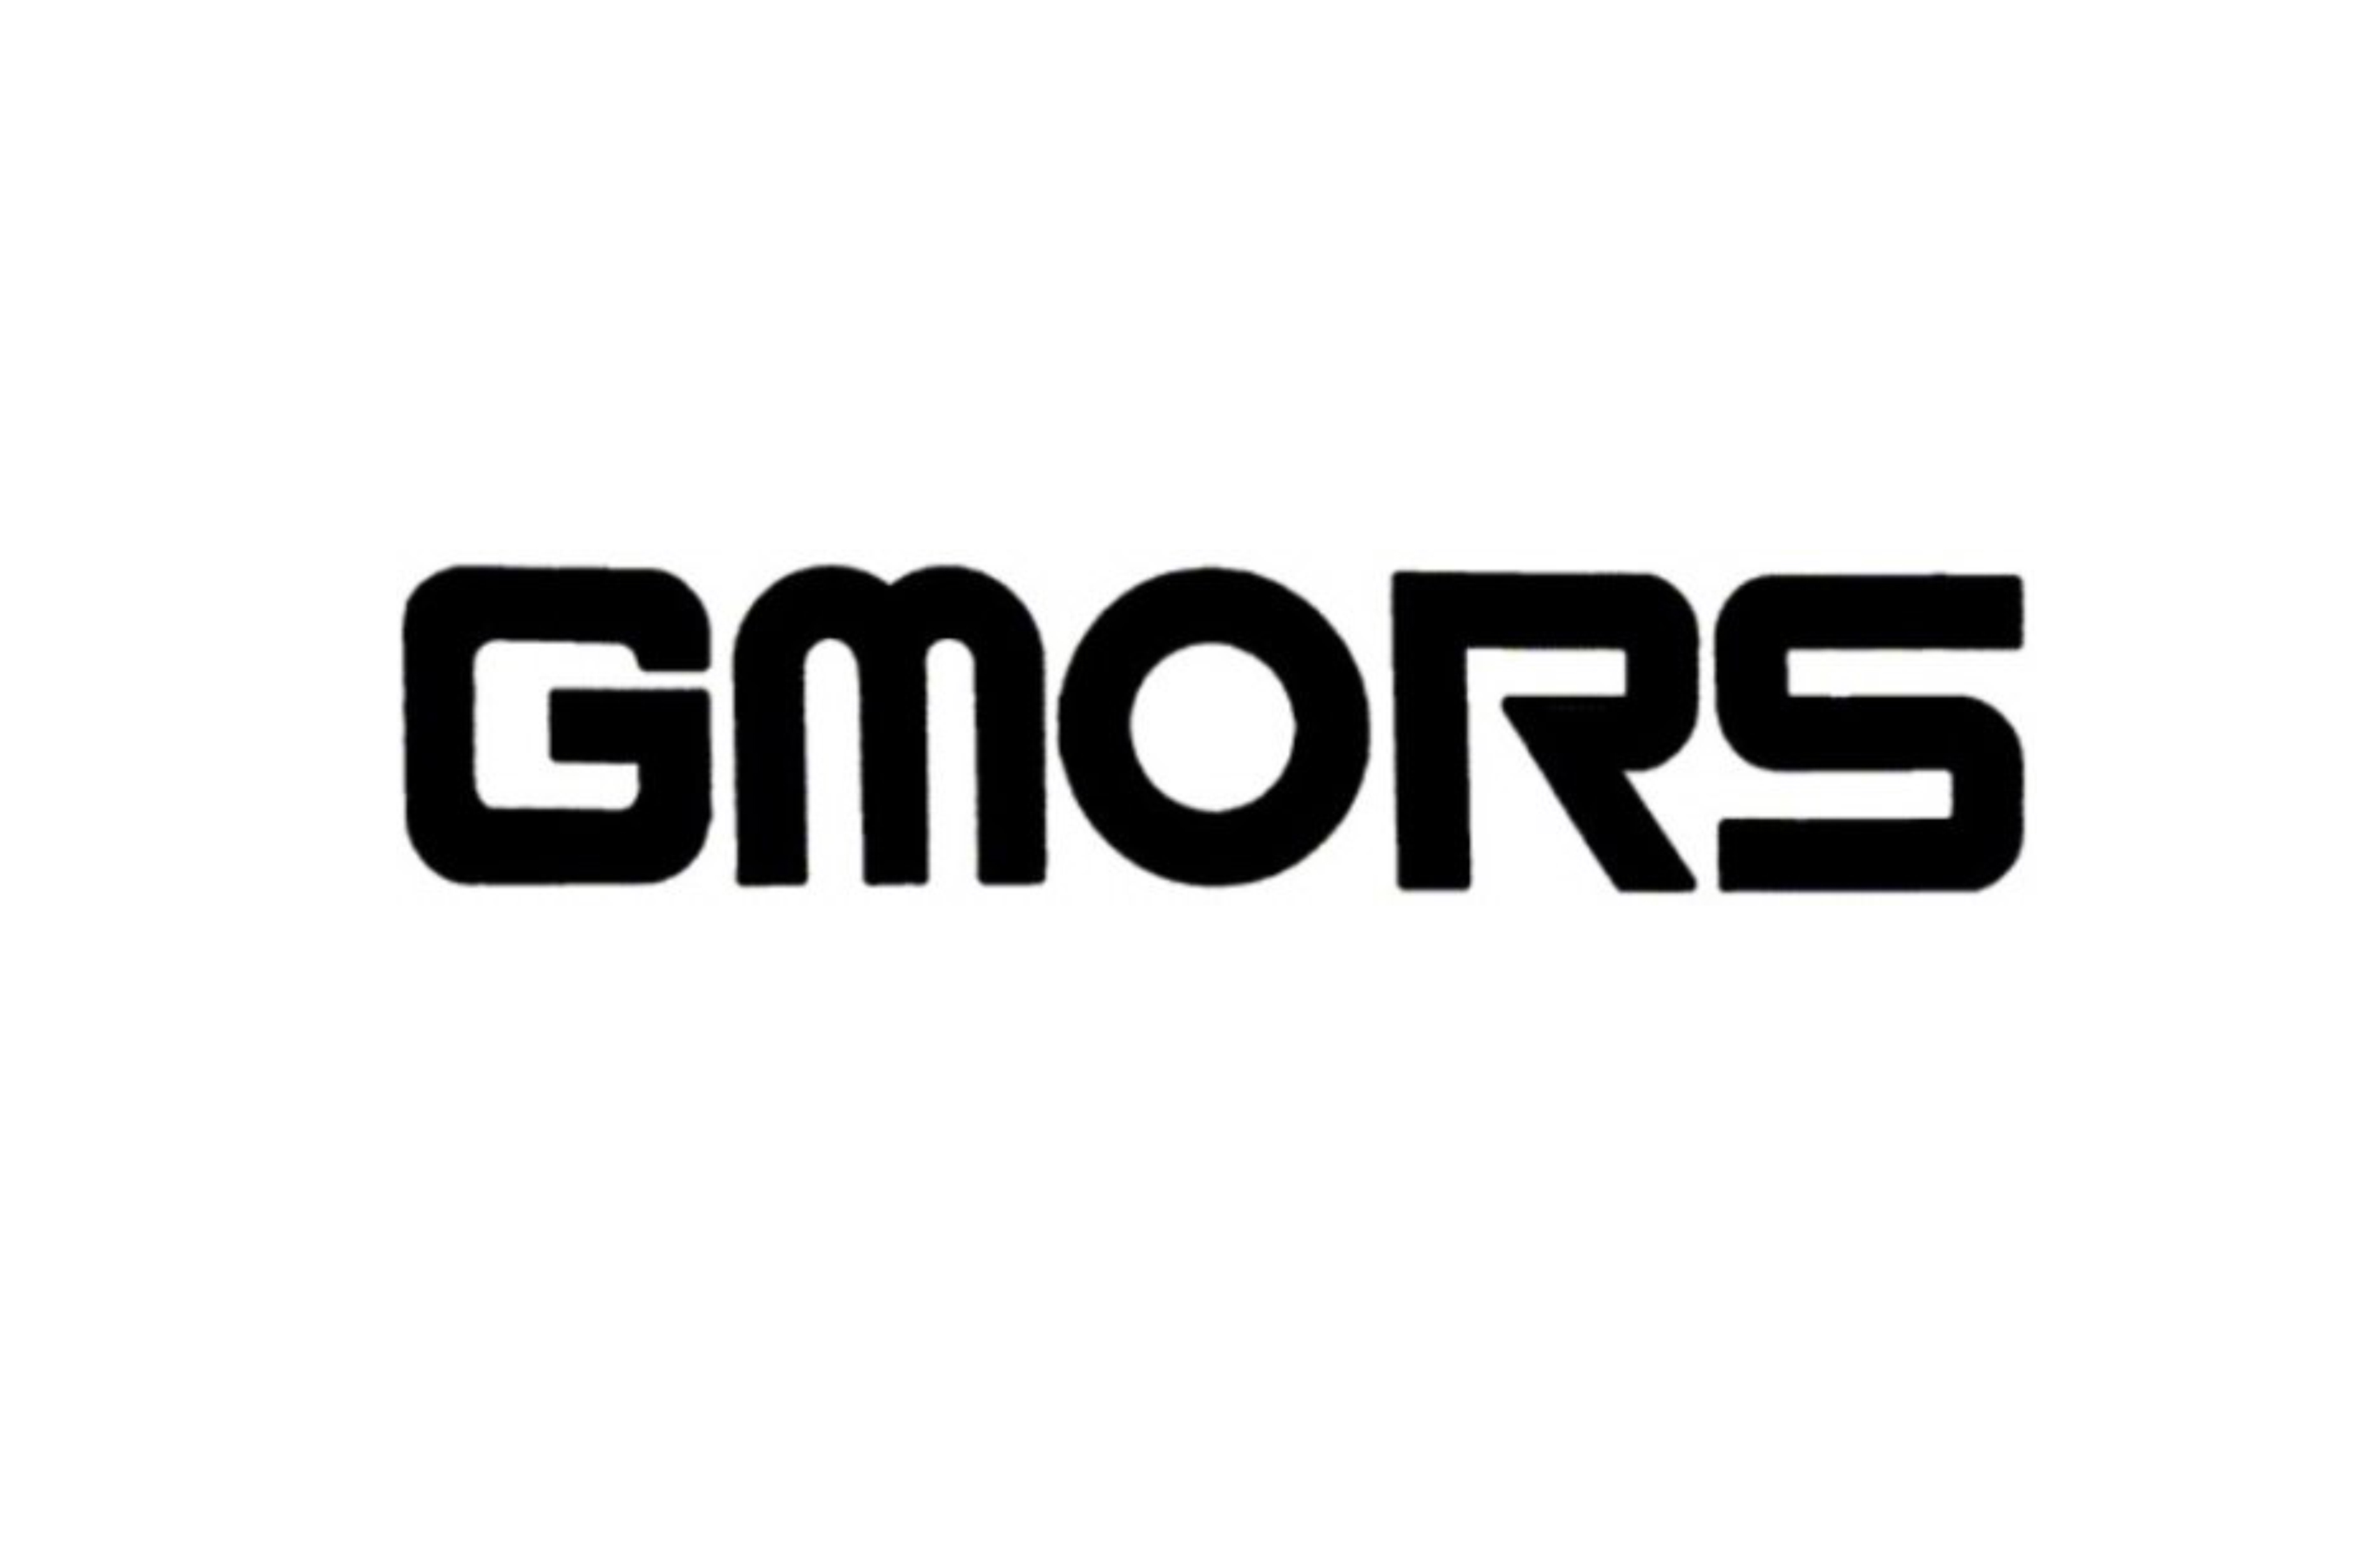 The brands GMORS